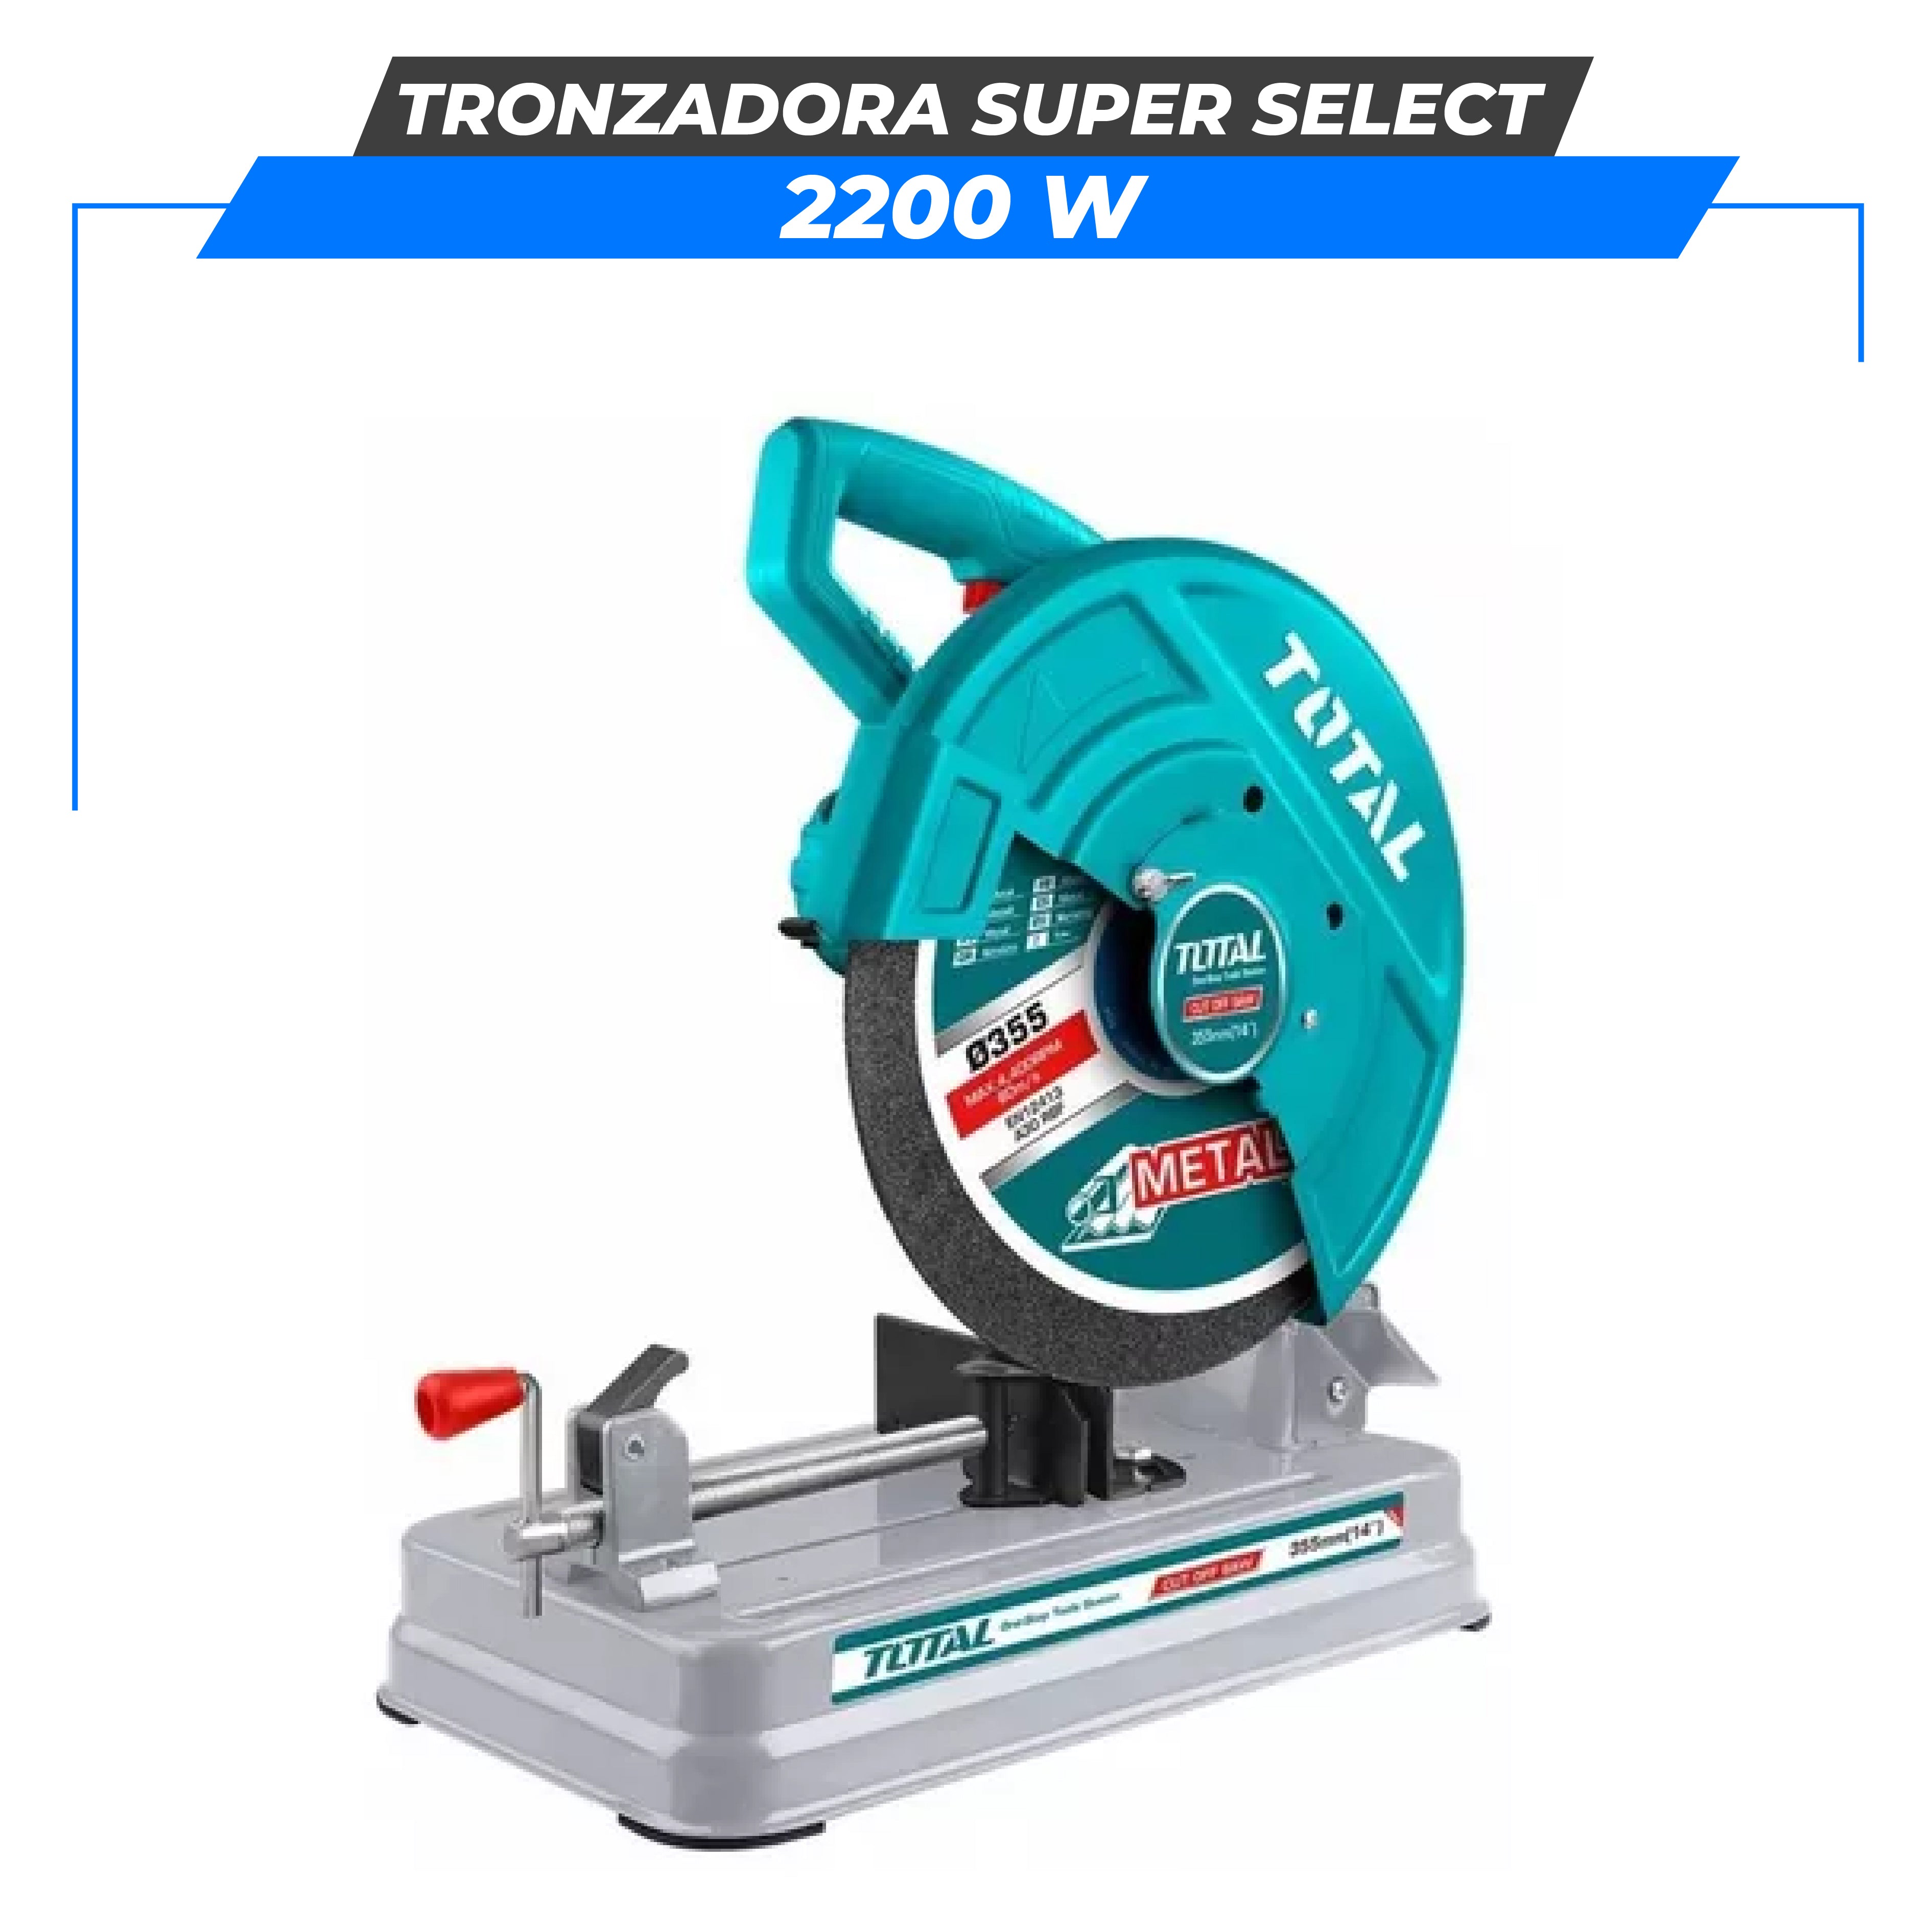 Tronzadora 2200W SUPER SELECT